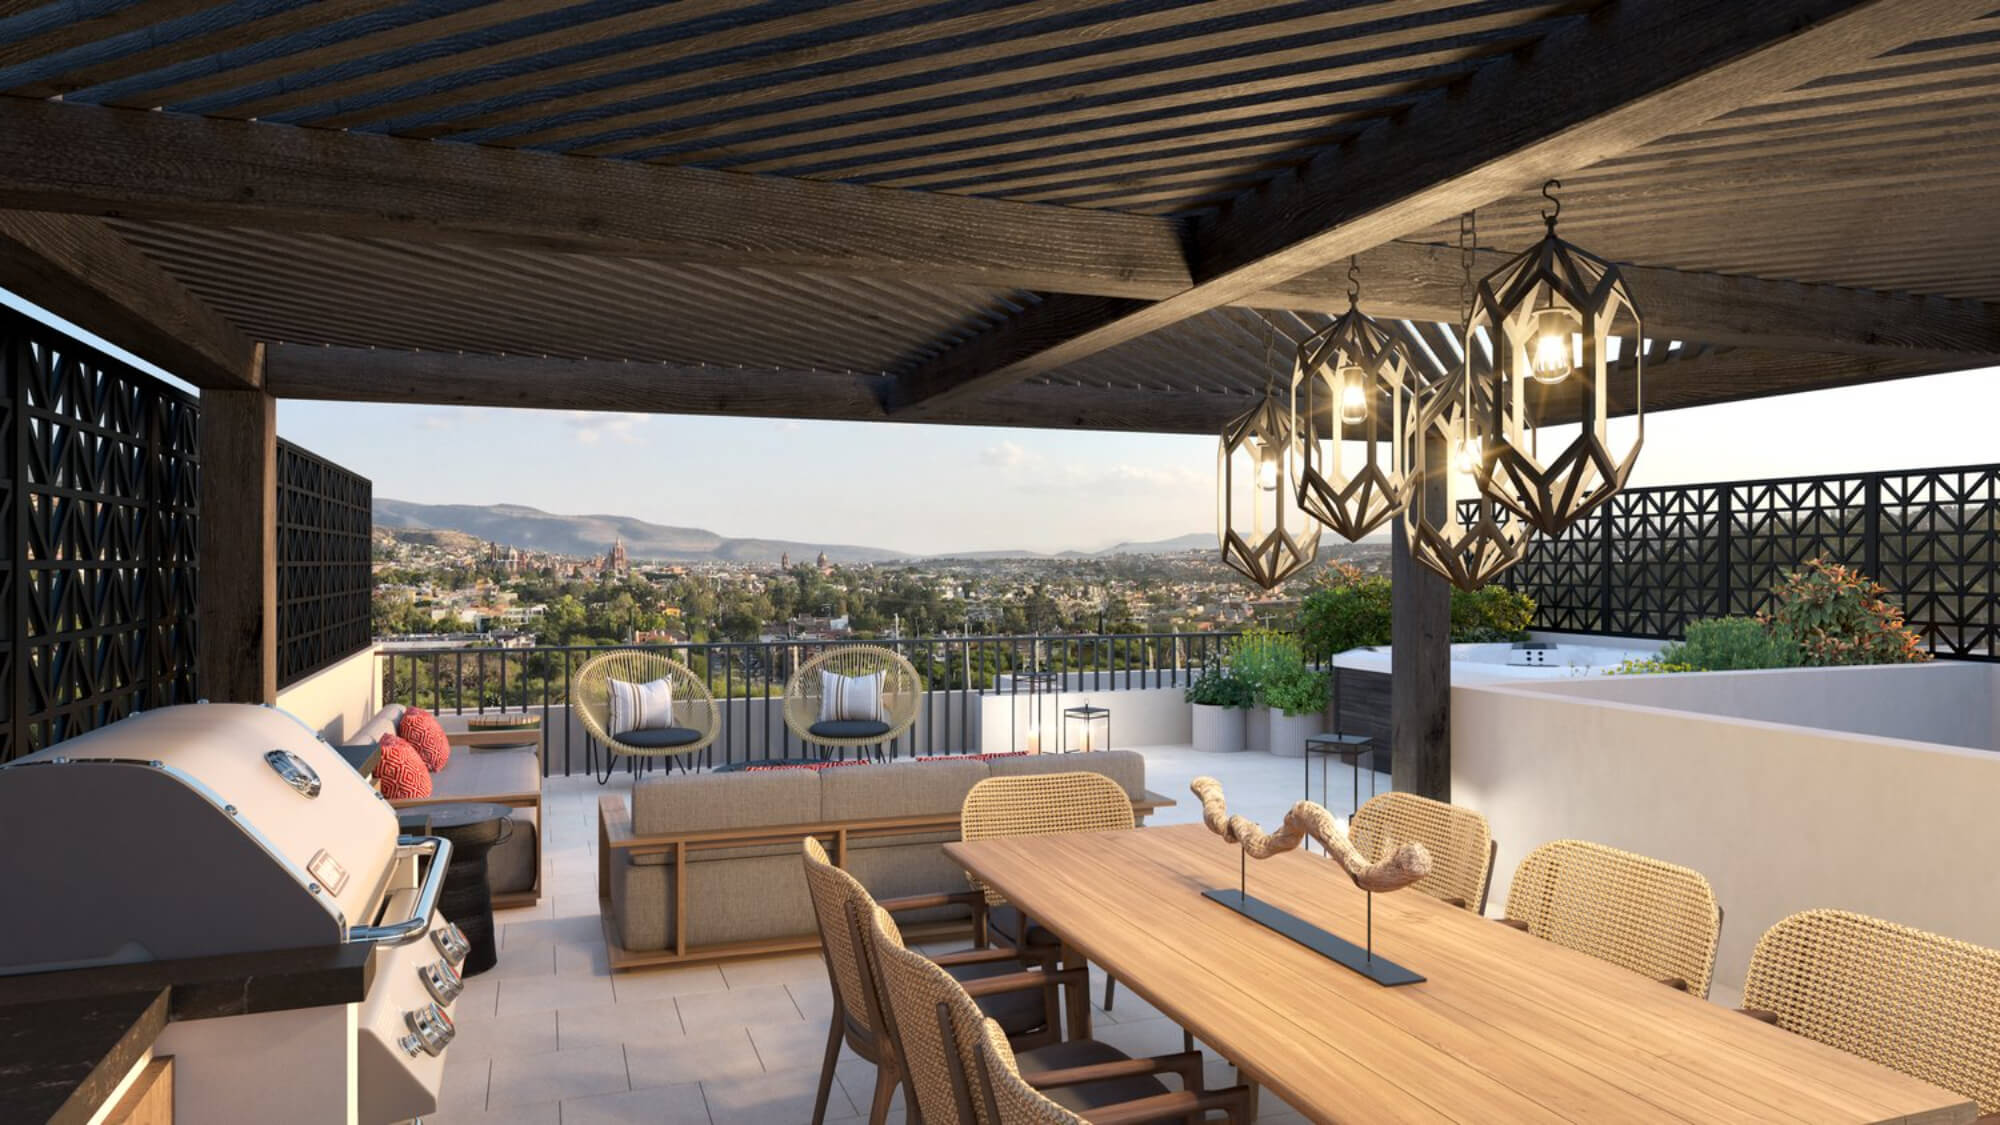 Luxury apartment, private terrace, pool, spa, gym, for sale San Miguel de Allende.